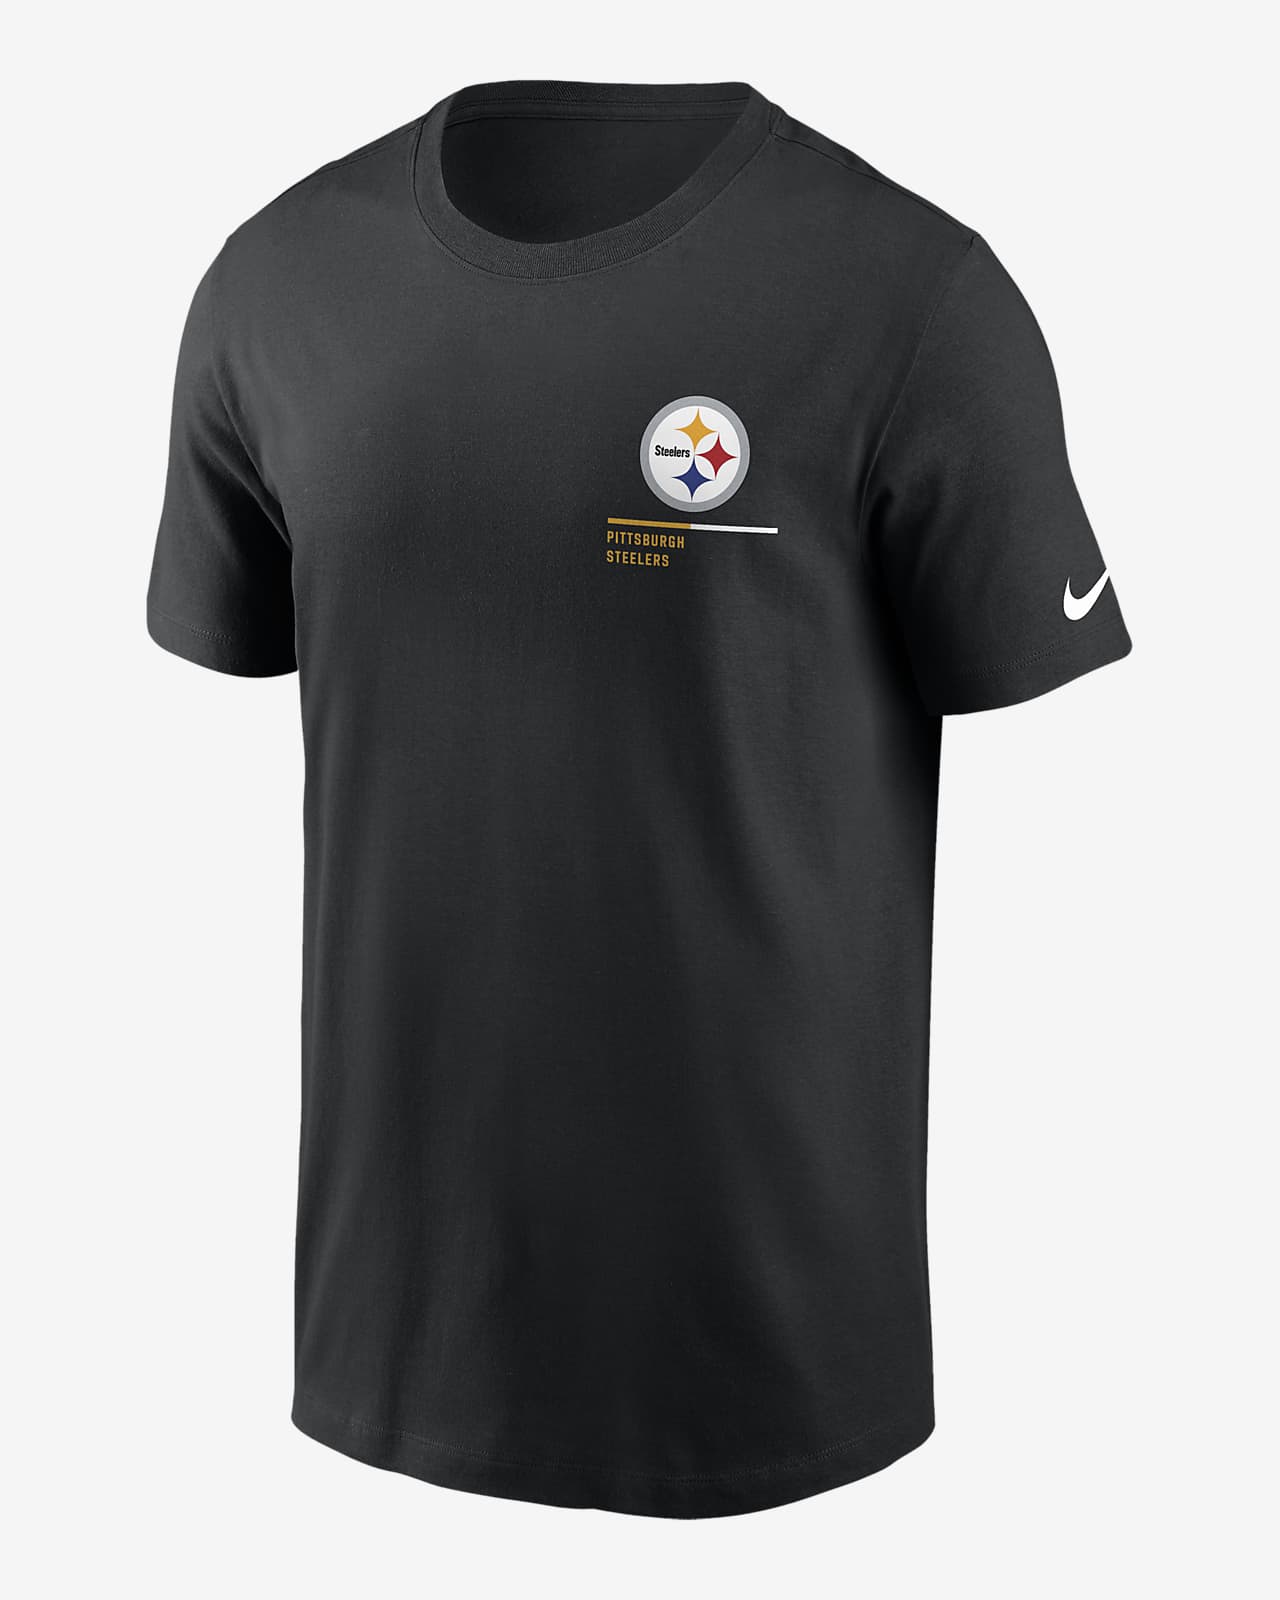 Nike Team Incline (NFL Pittsburgh Steelers) Men's T-Shirt